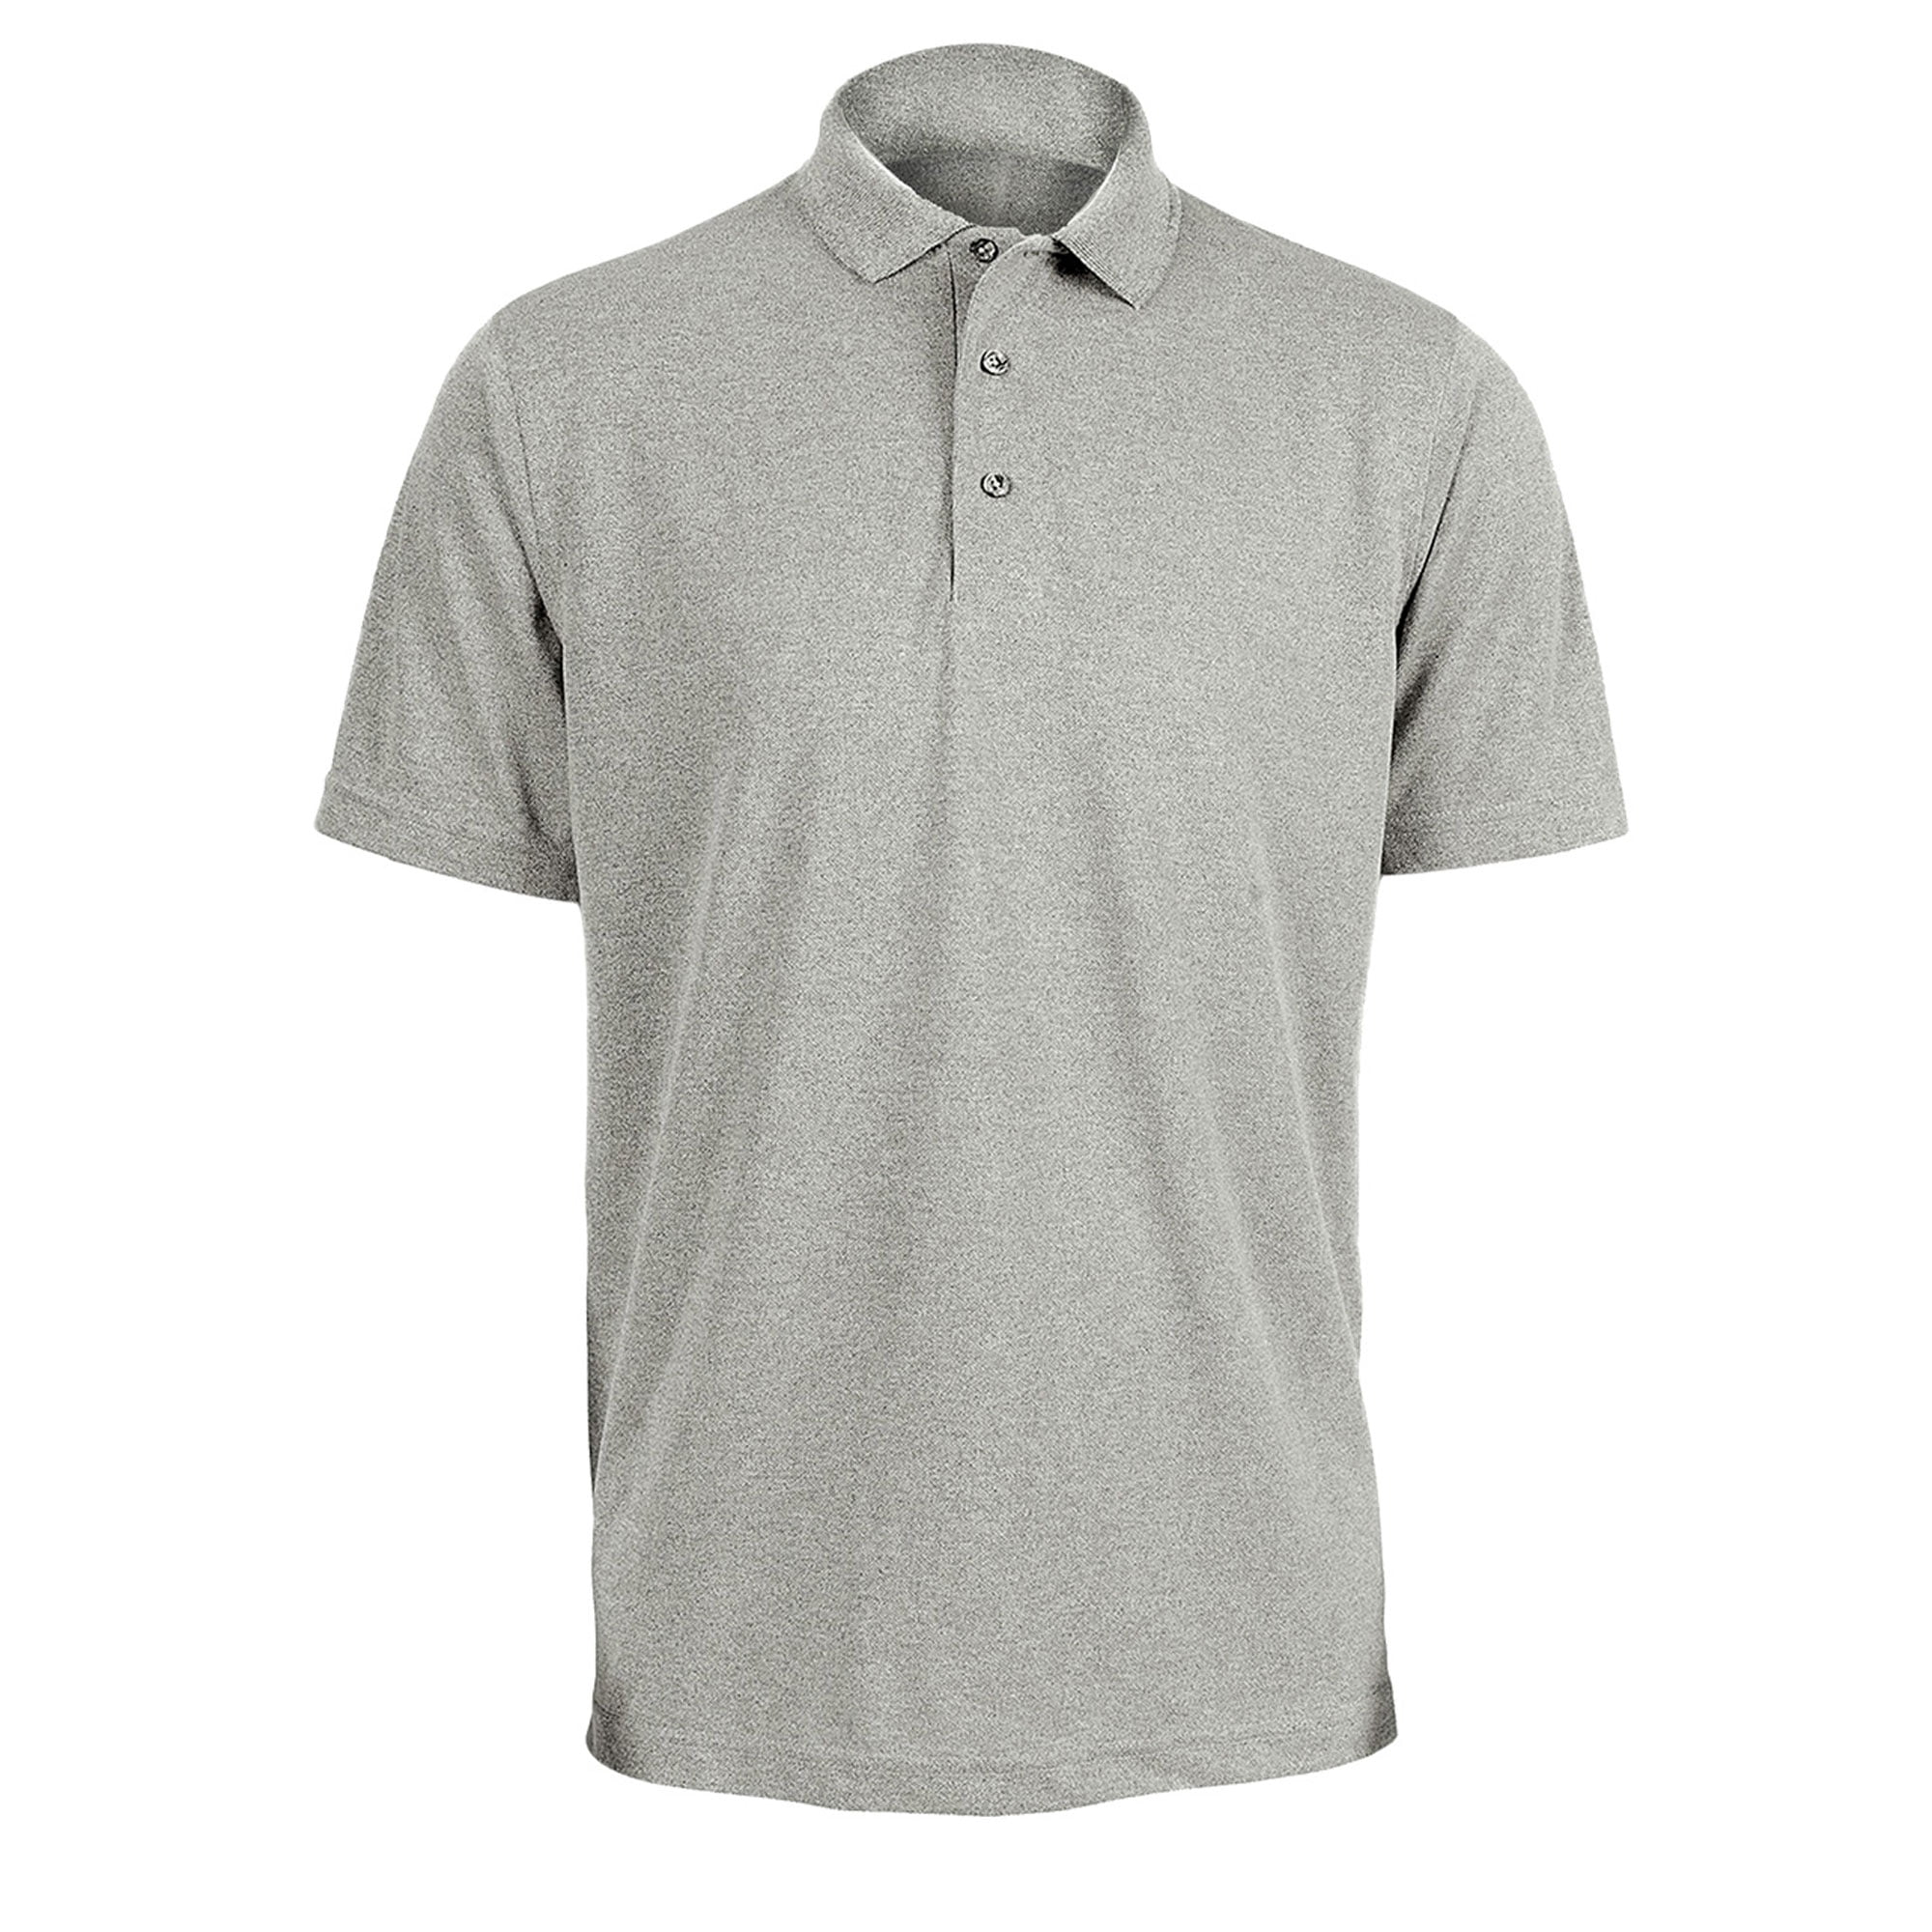 Paragon Men's Anti Microbial 30 Upf Protection Polo Shirt, Style 100